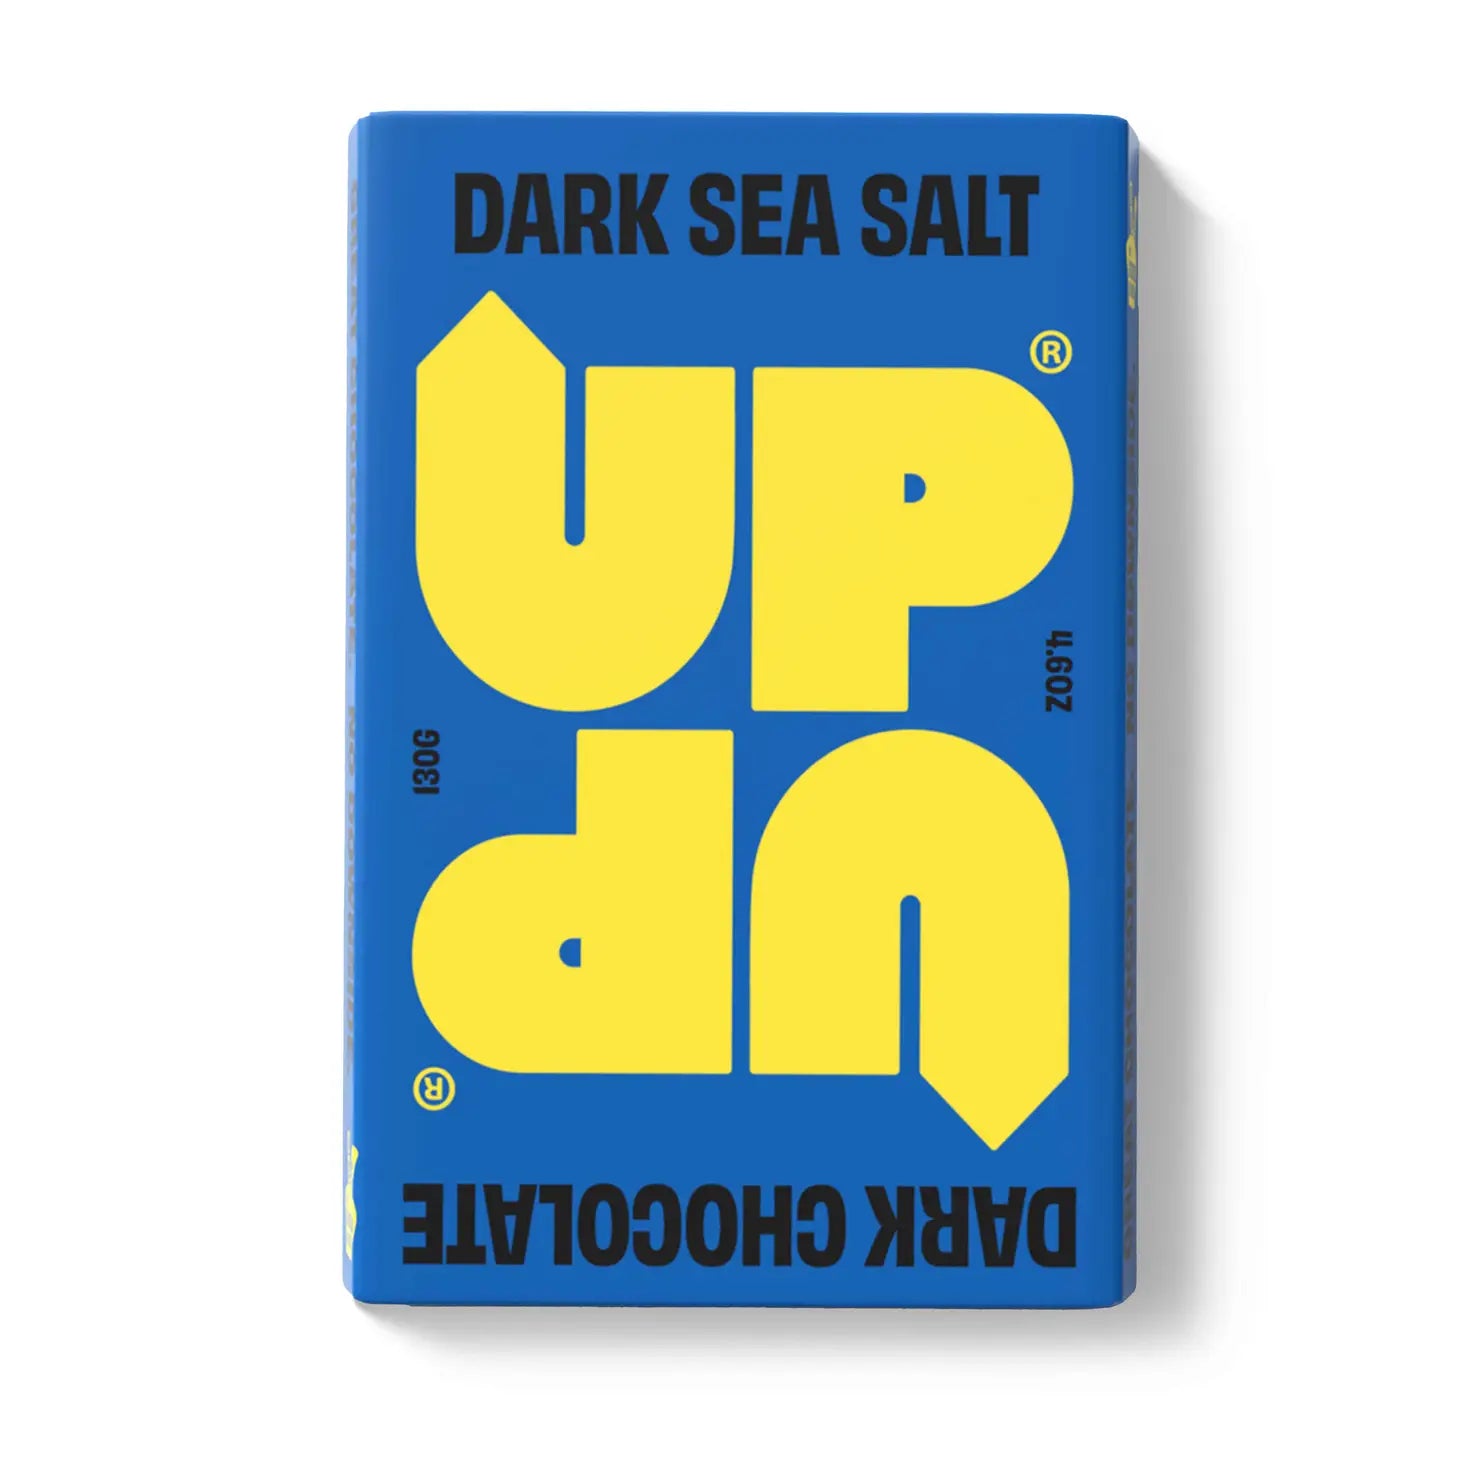 Dunkle Schokolade "Dark Sea Salt" 130g / UP-UP Chocolate